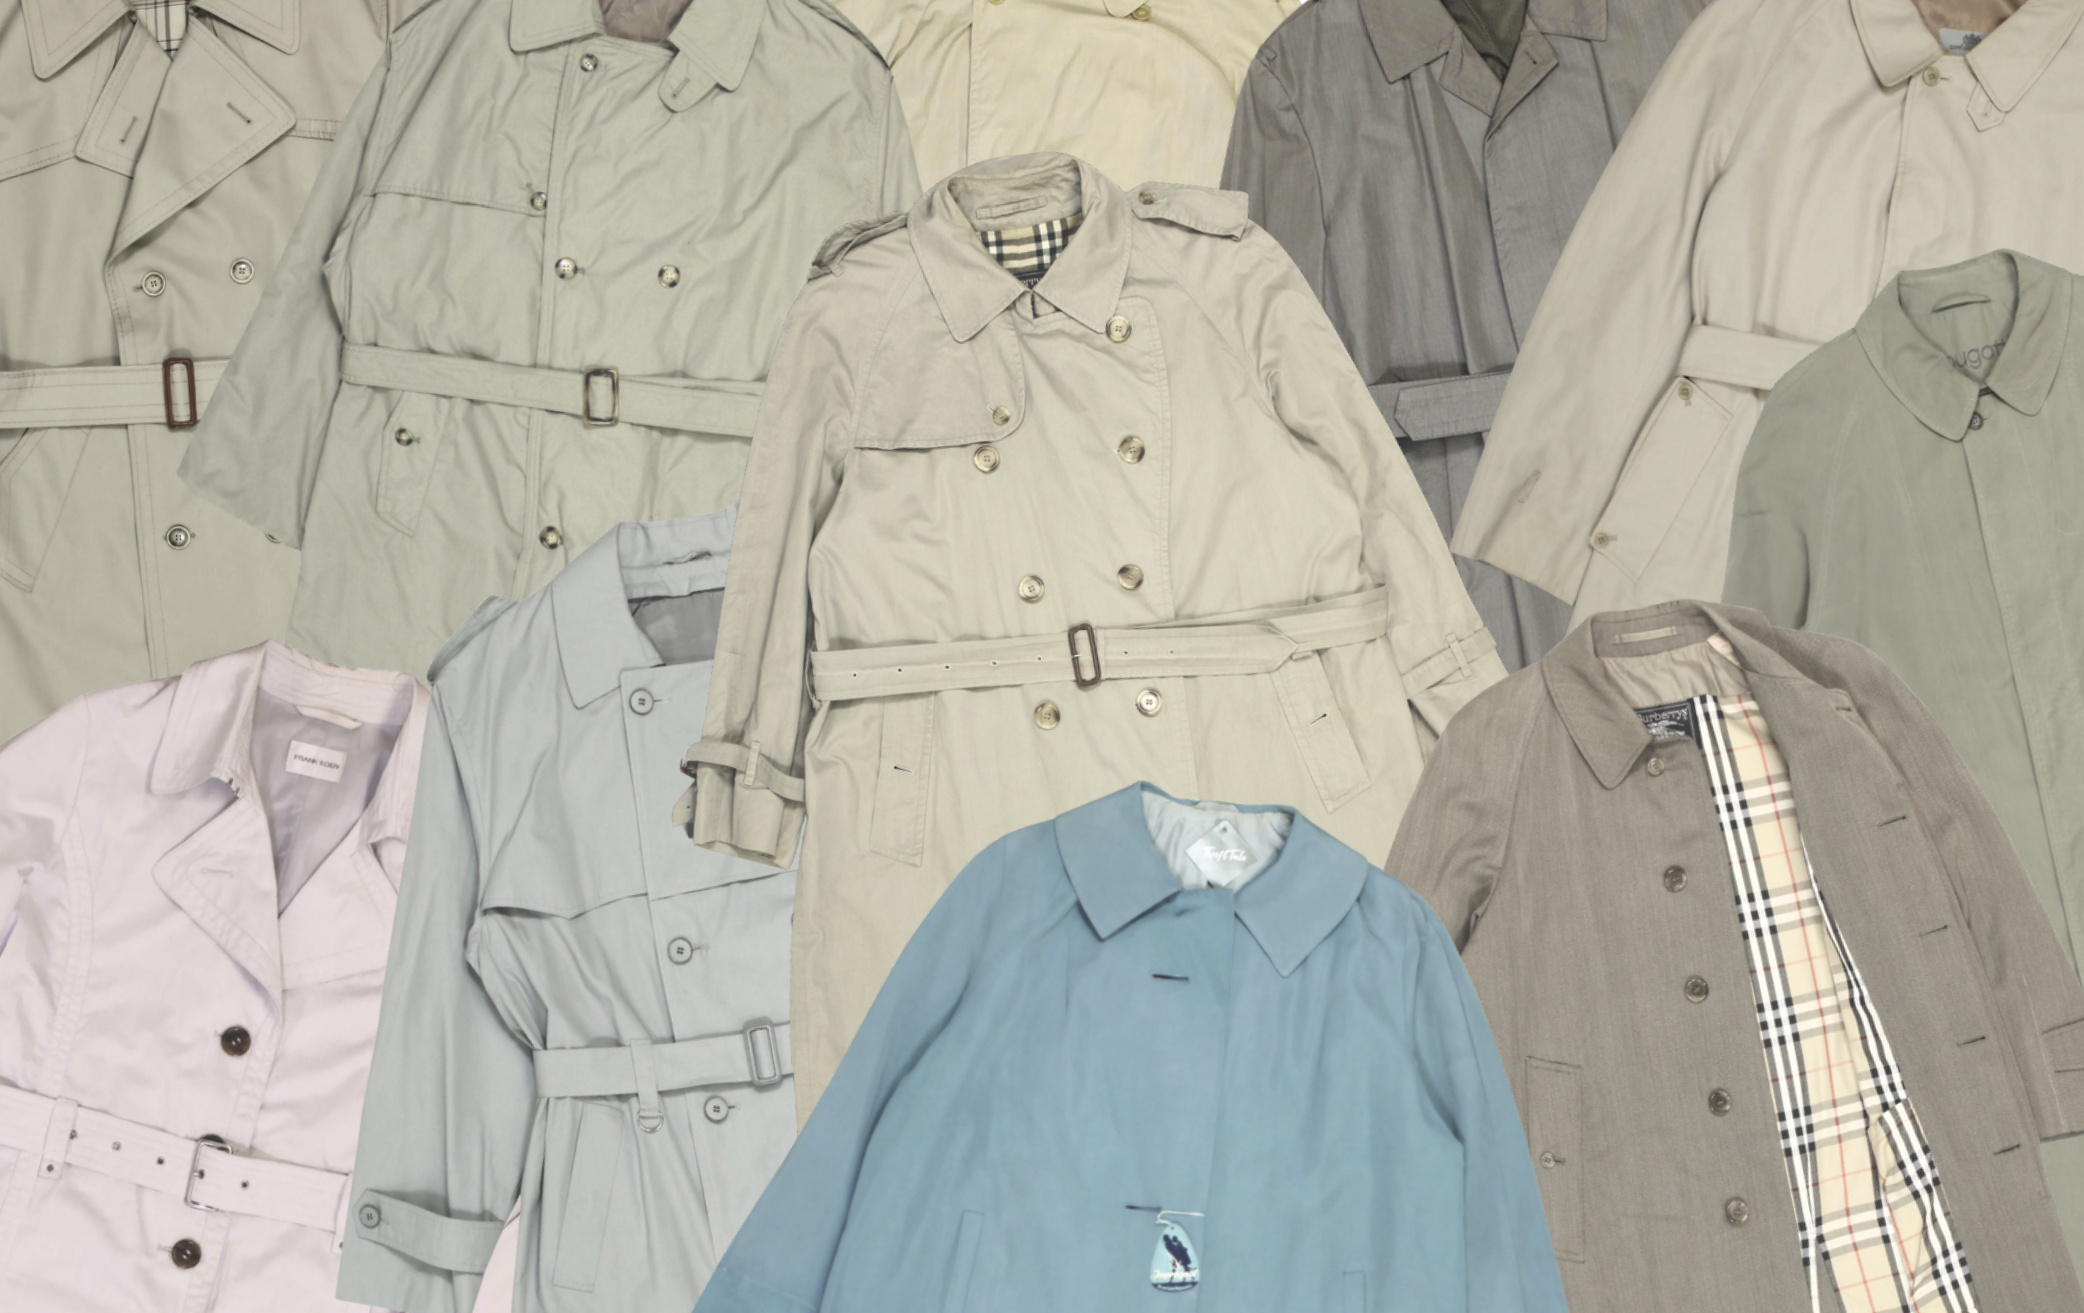 Vintage Raincoats: Trench Coat or Mac?